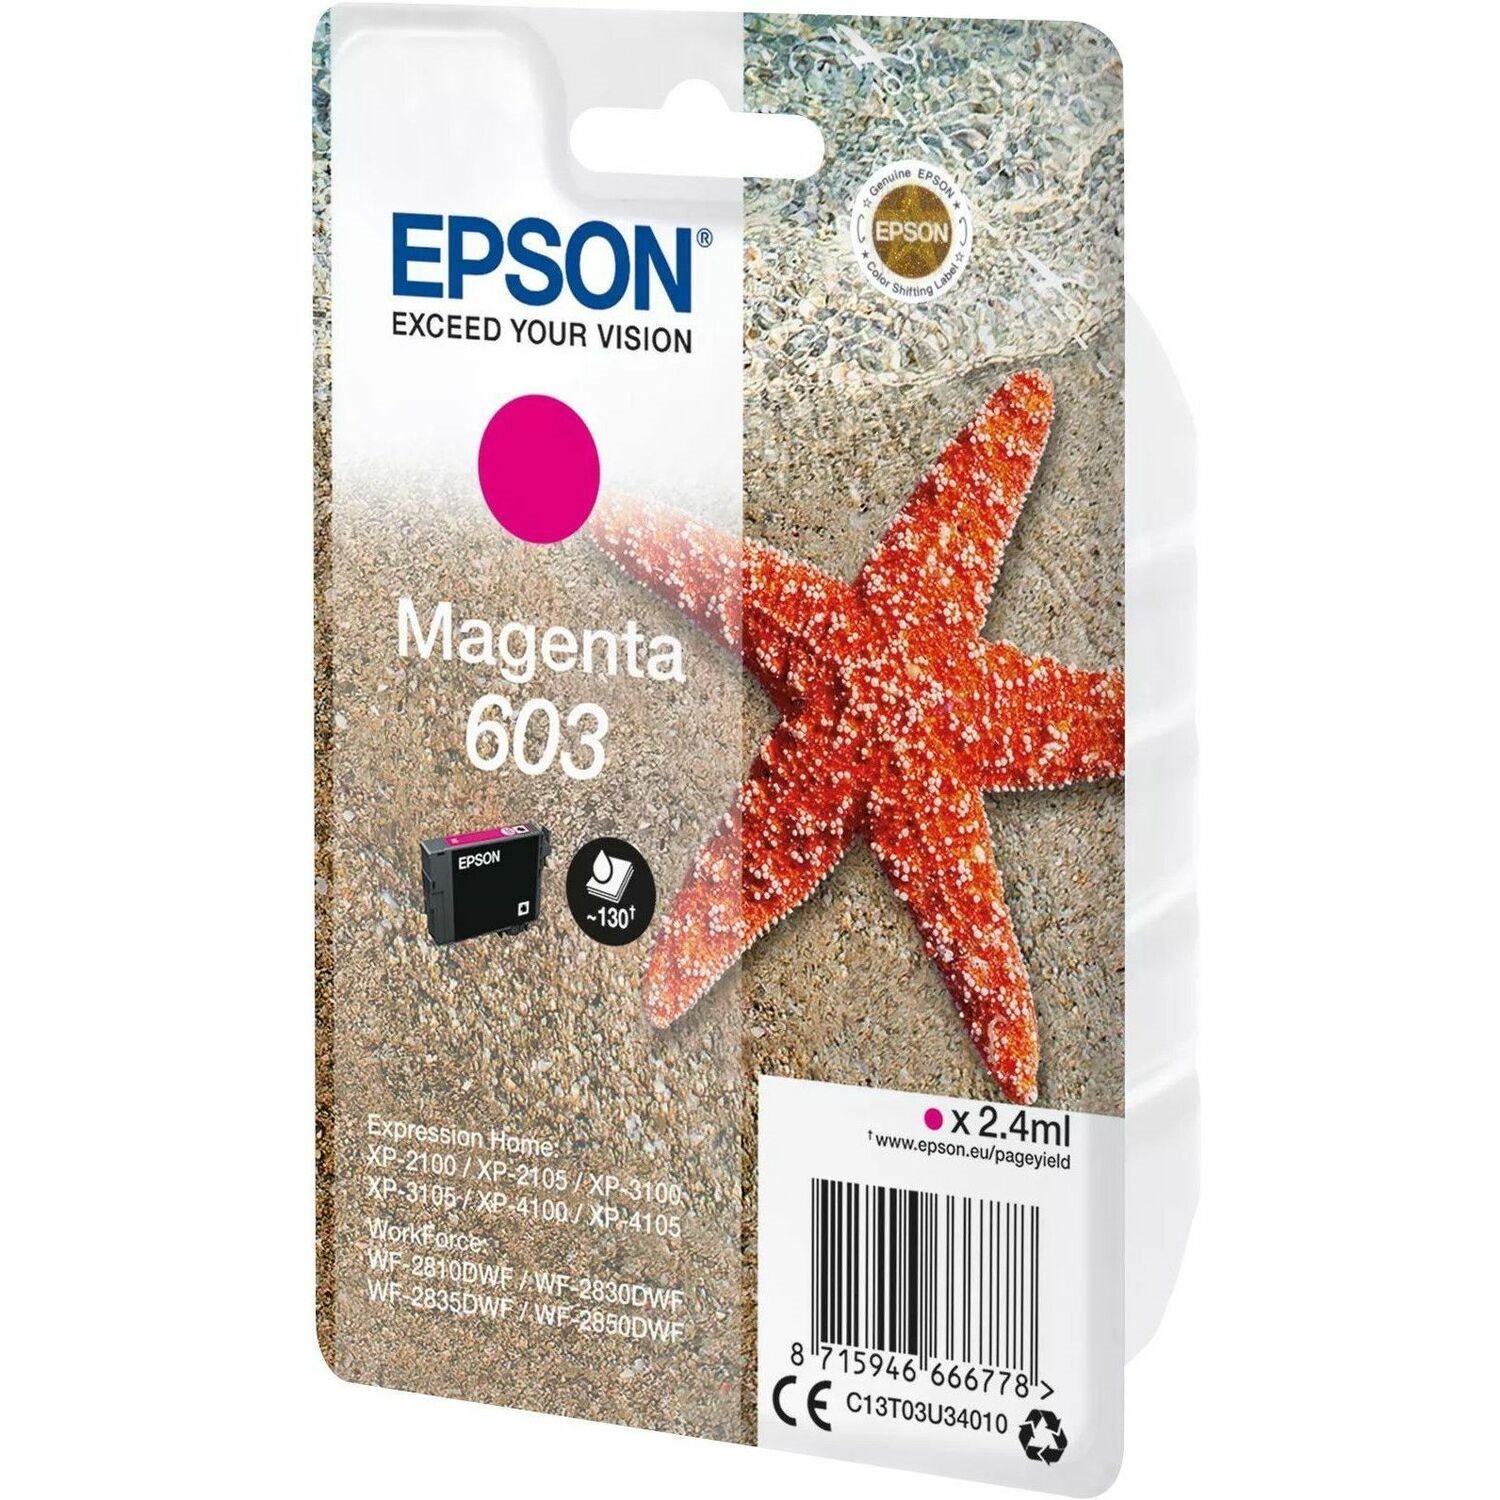 Epson 603 Original Inkjet Ink Cartridge - Single Pack - Magenta - 1 Pack